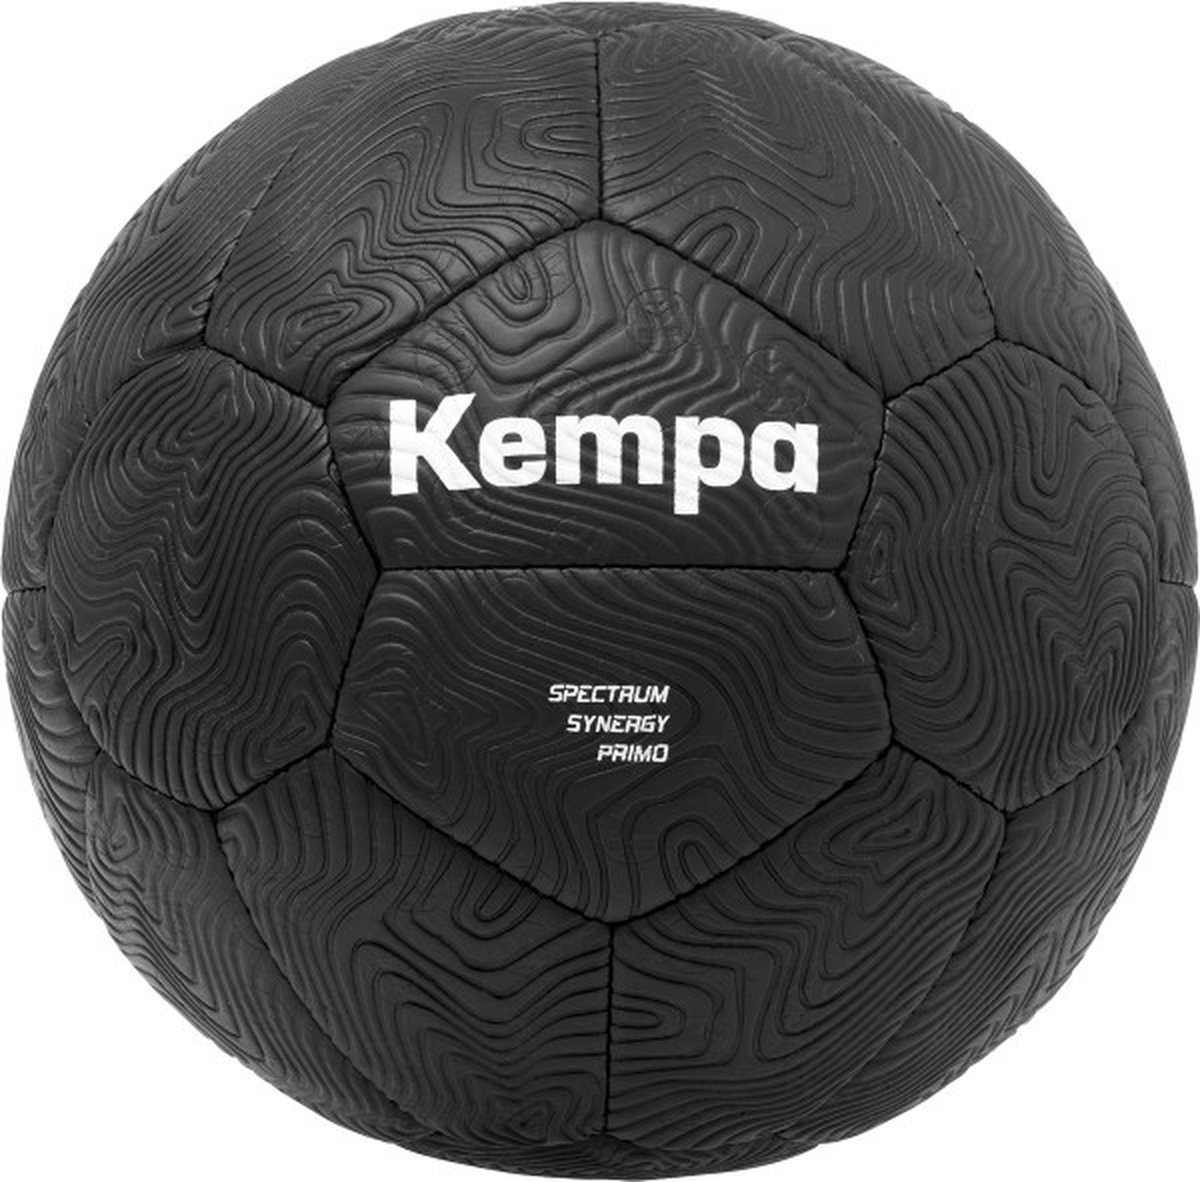 Kempa Black and White Synergy Spectrum Primo Handbal Maat Mt. 3